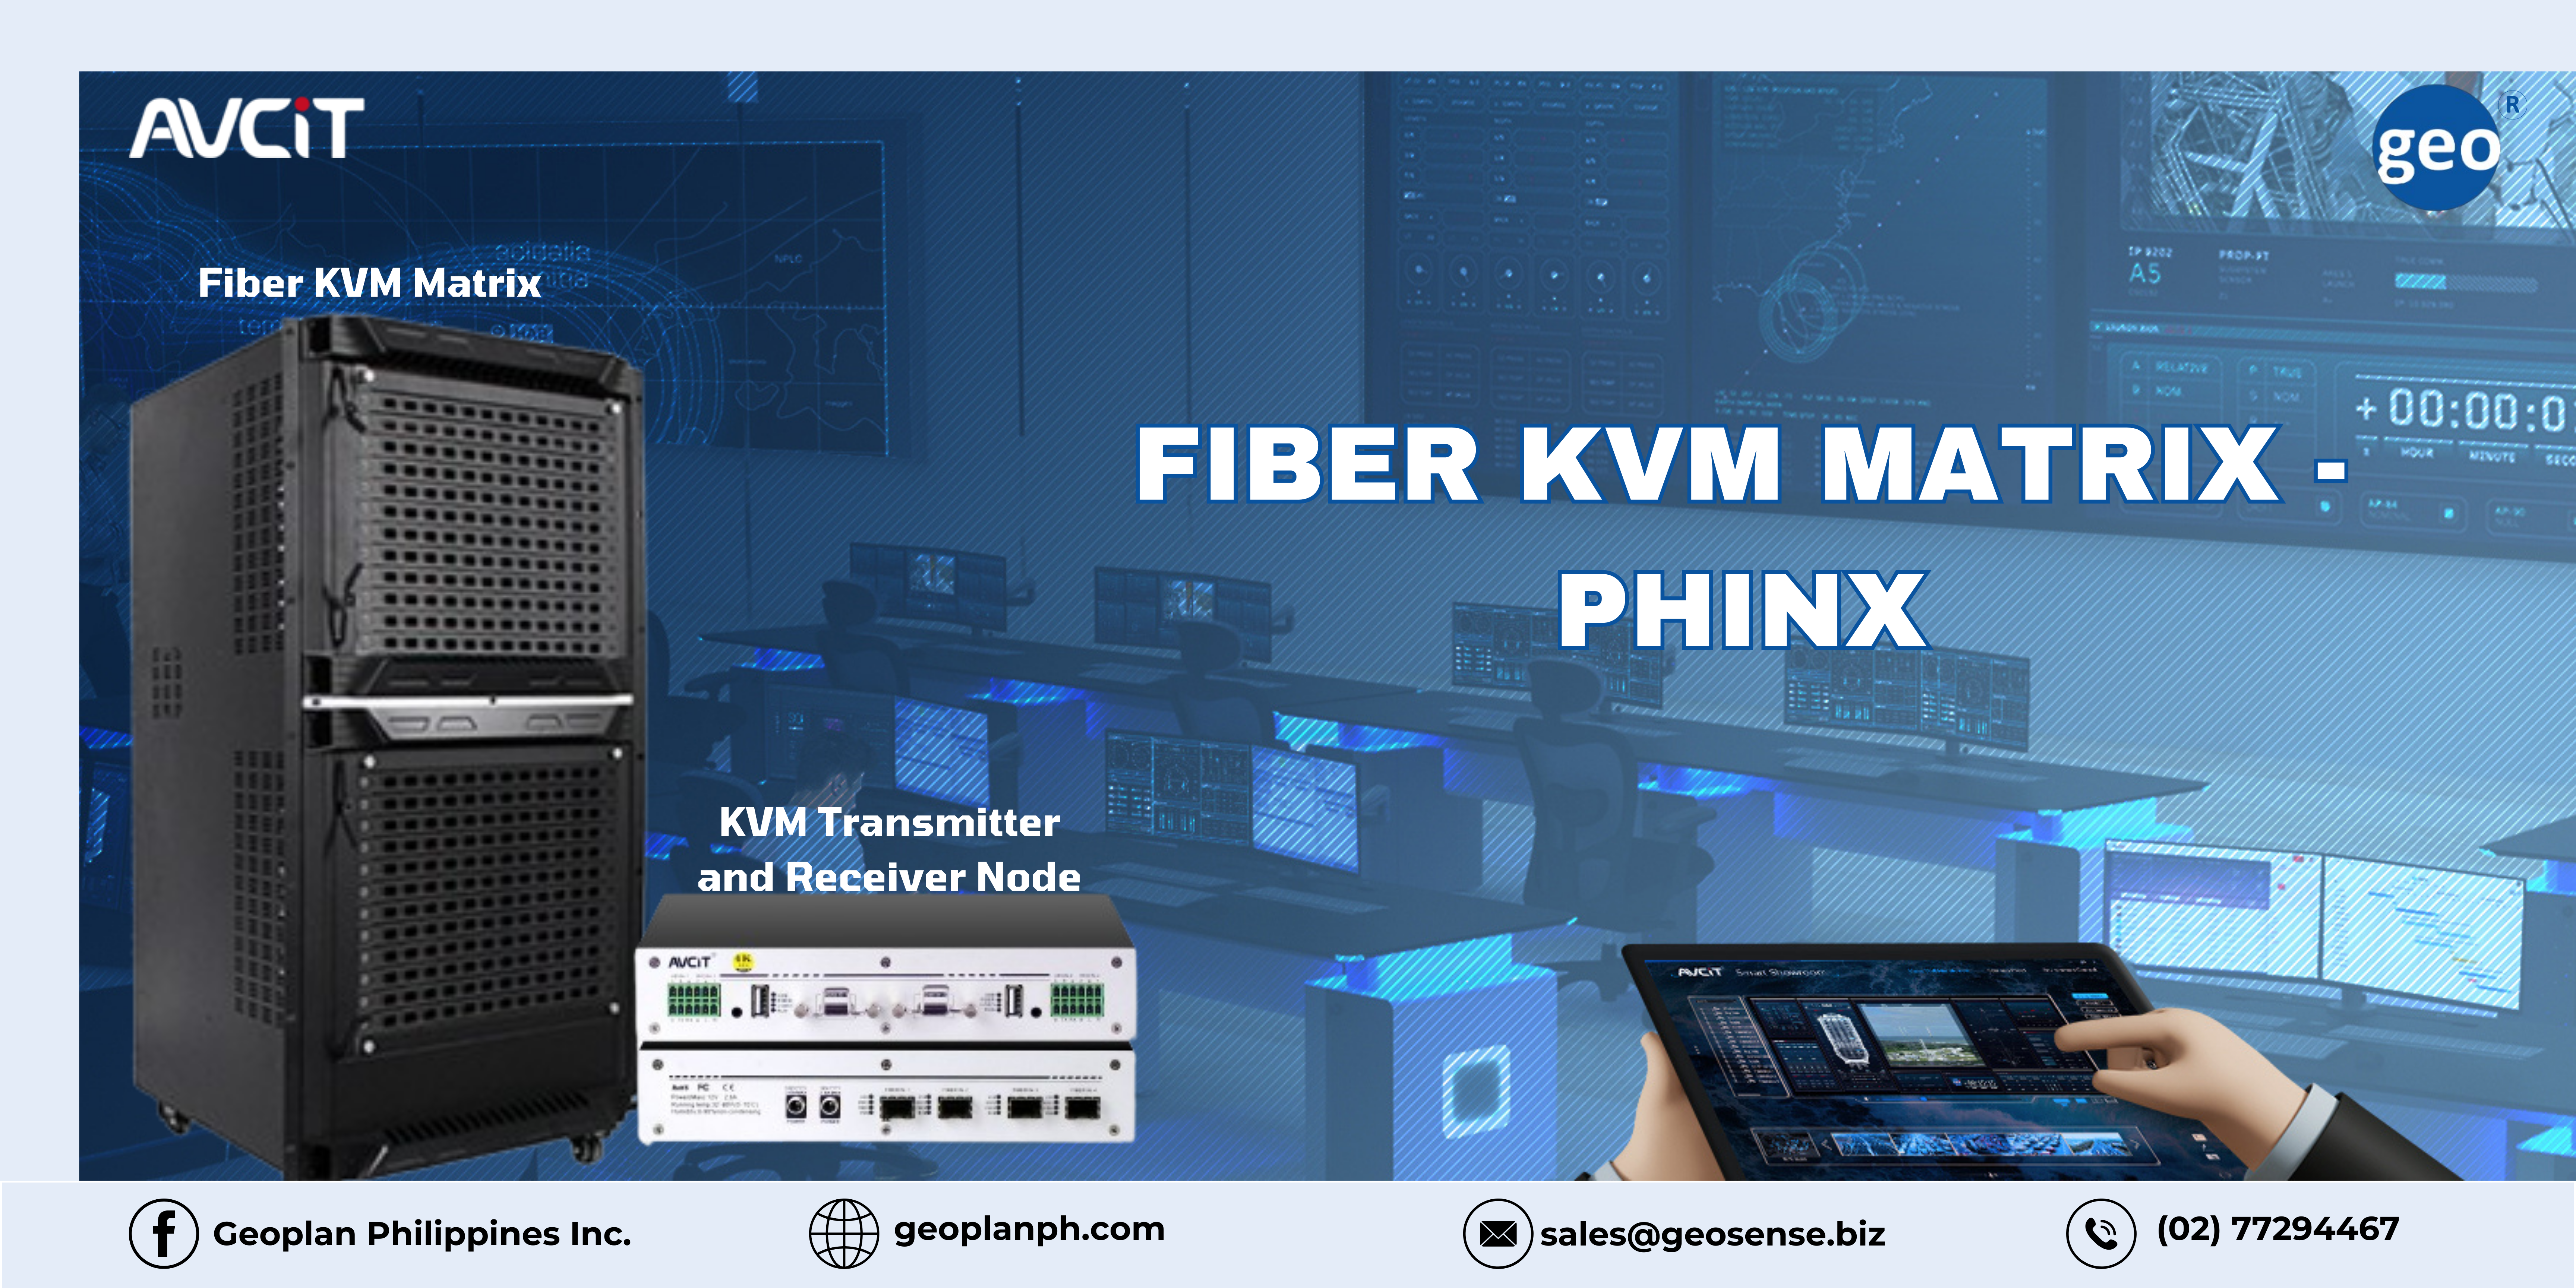 AVCIT: The Innovative Fiber KVM Matrix-Phinx with Dynamic Port Detection